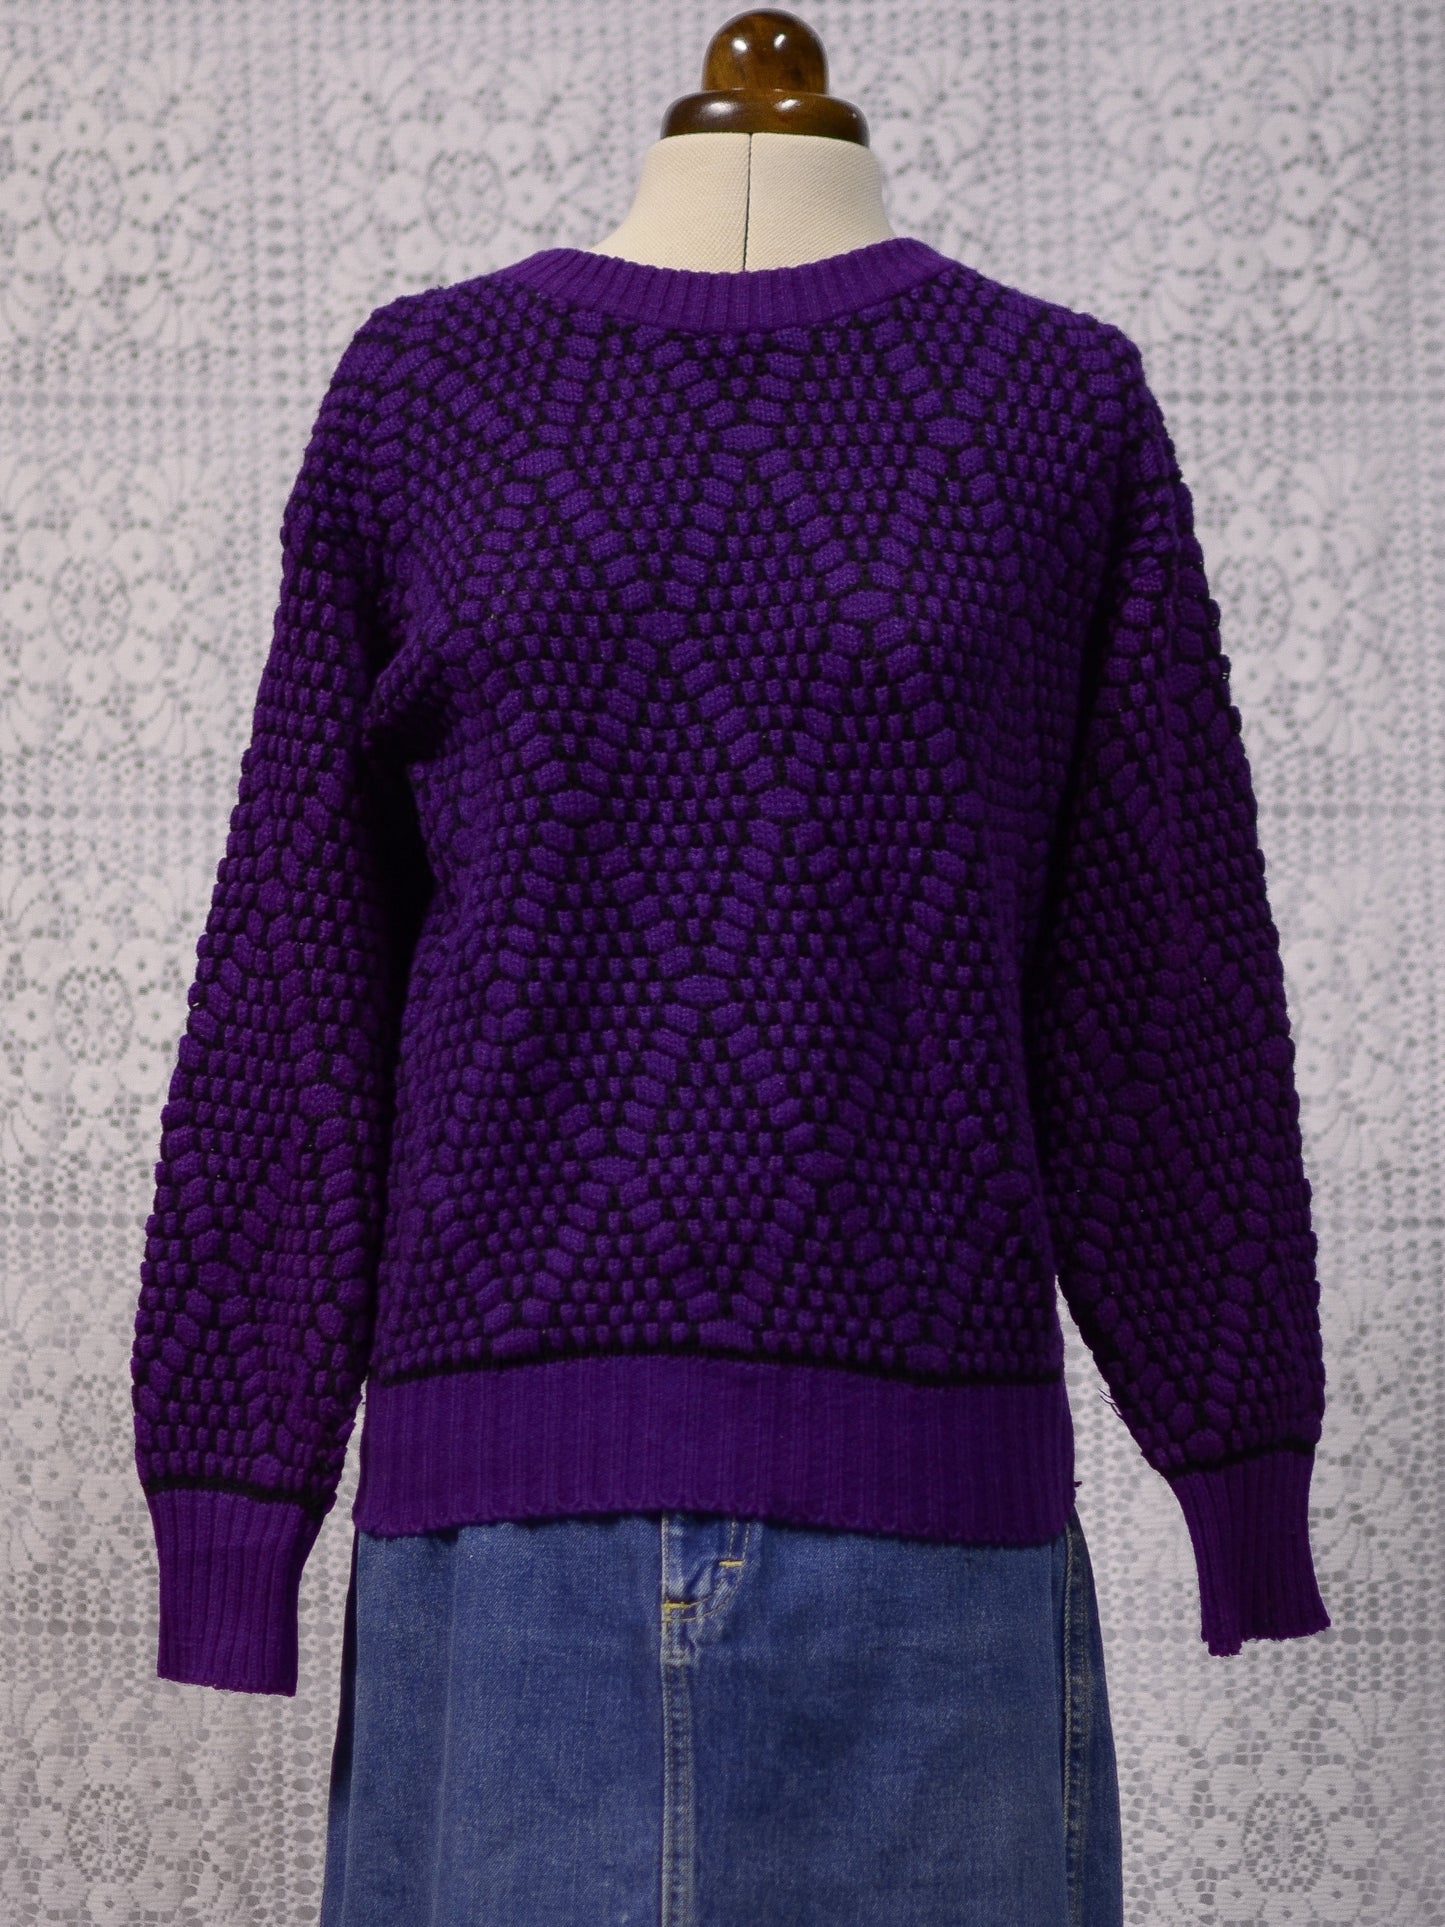 1980s purple and black diamond pattern jumper